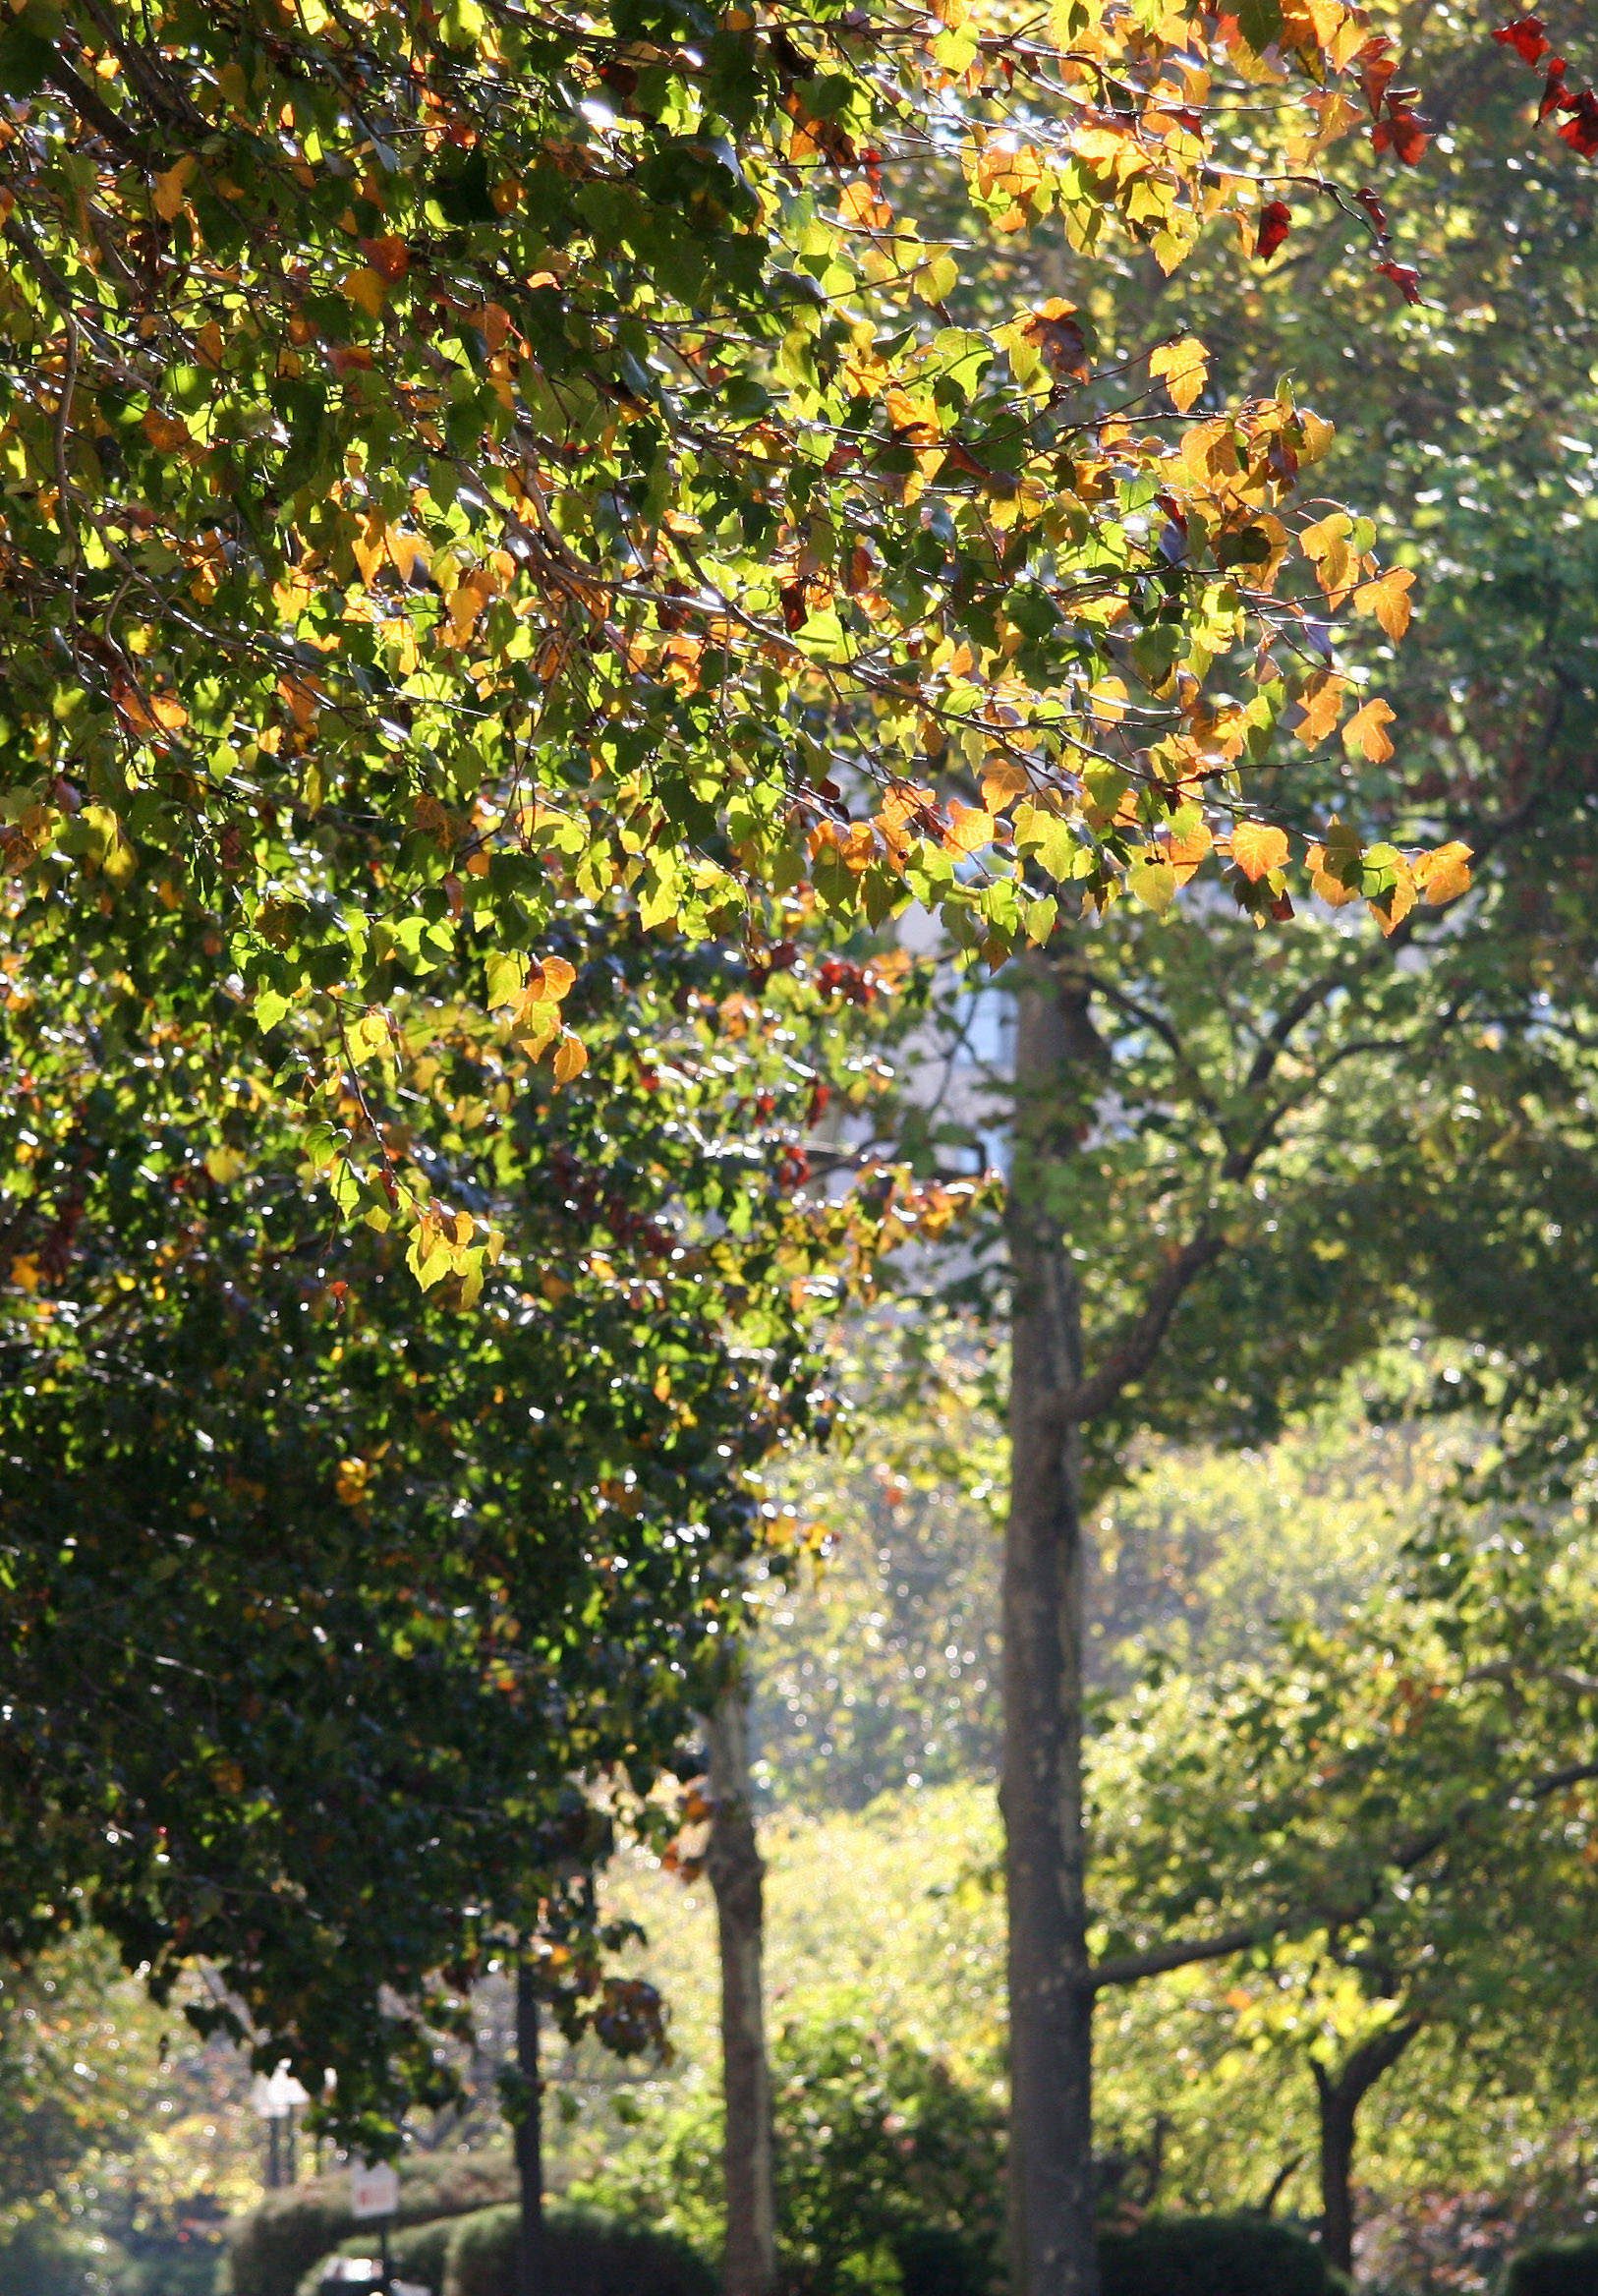 Garden View - Hawthorne Foliage Highlighted